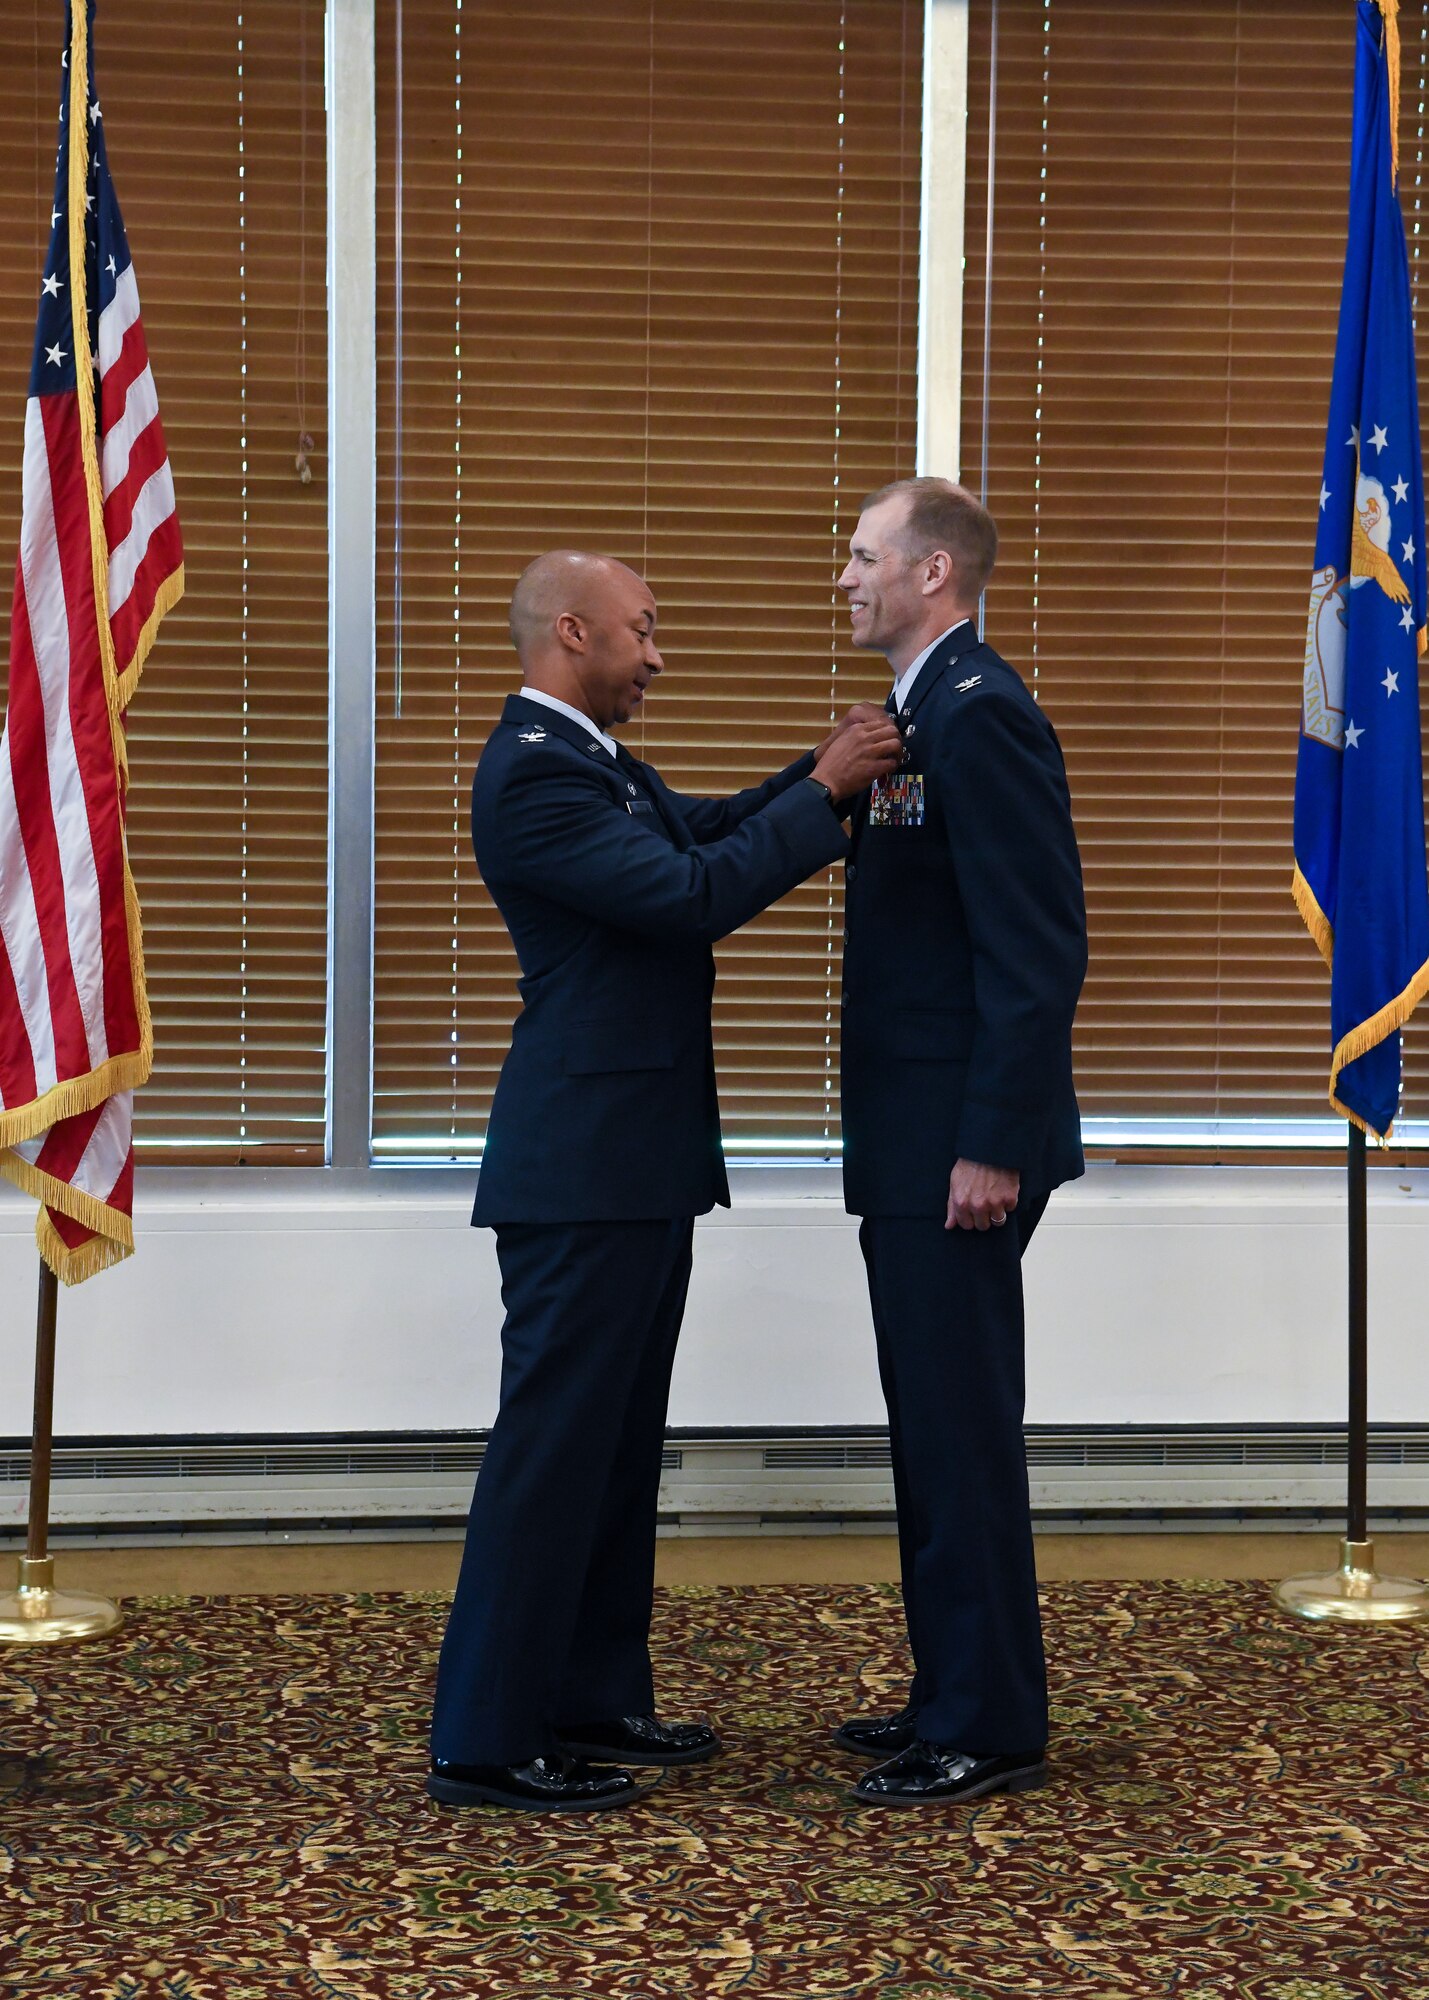 Air Force officer awarding medal to fellow officer